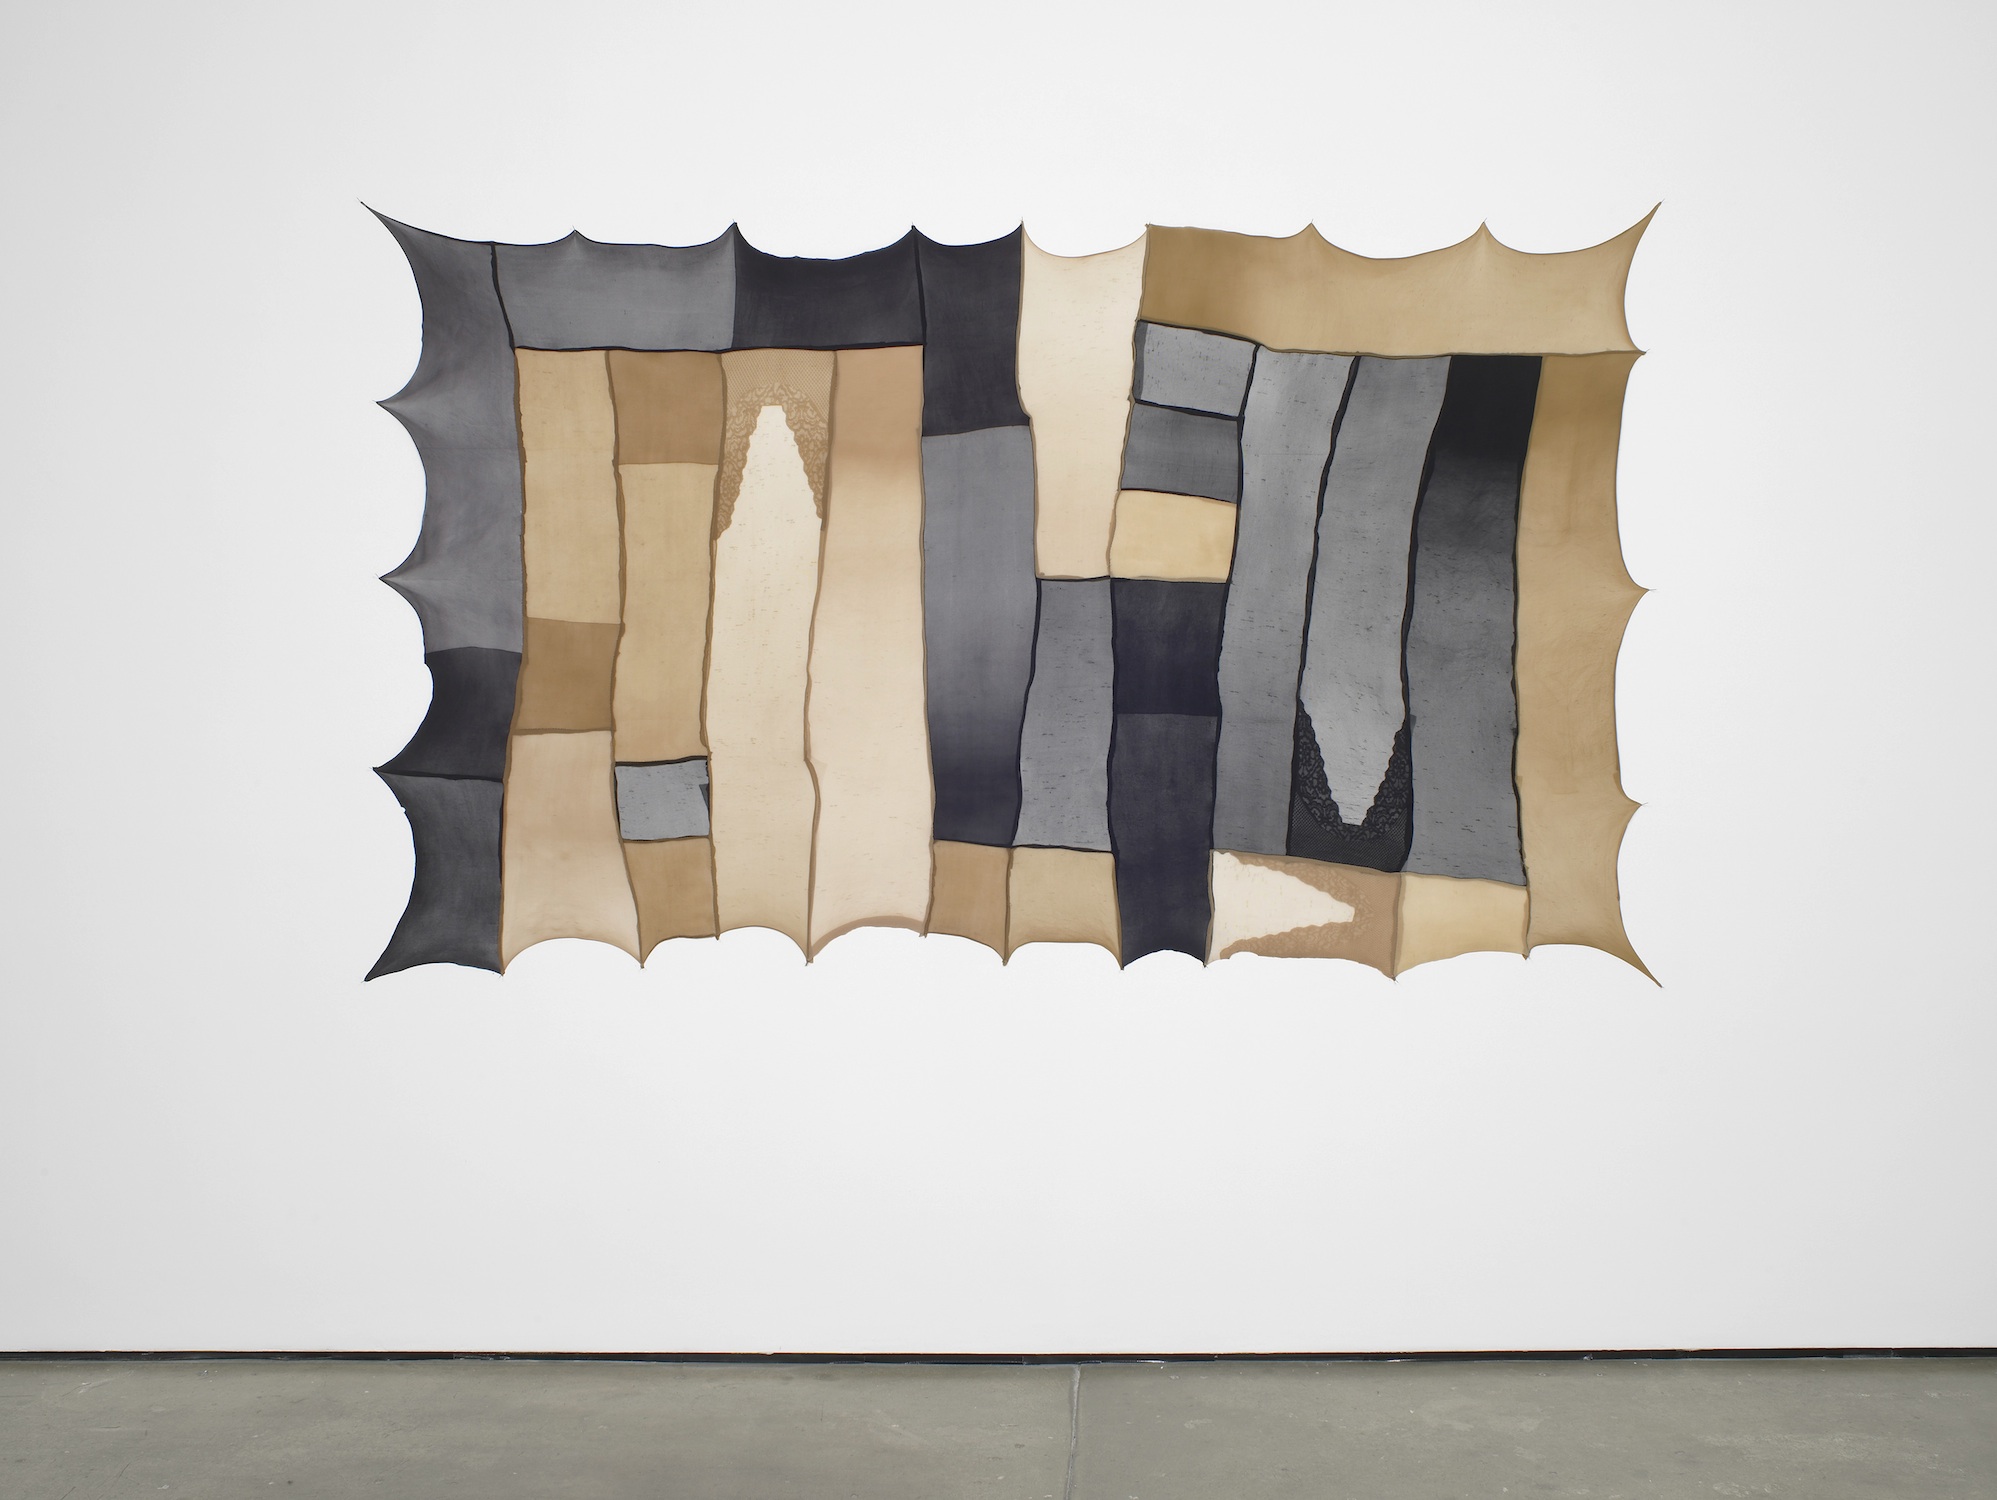  Alexandra Bircken, Mixed Race, 2012, 90% nylon, 10% elastane, fabric stiffener, 142.5 x 239 cm. Image courtesy Herald St, London